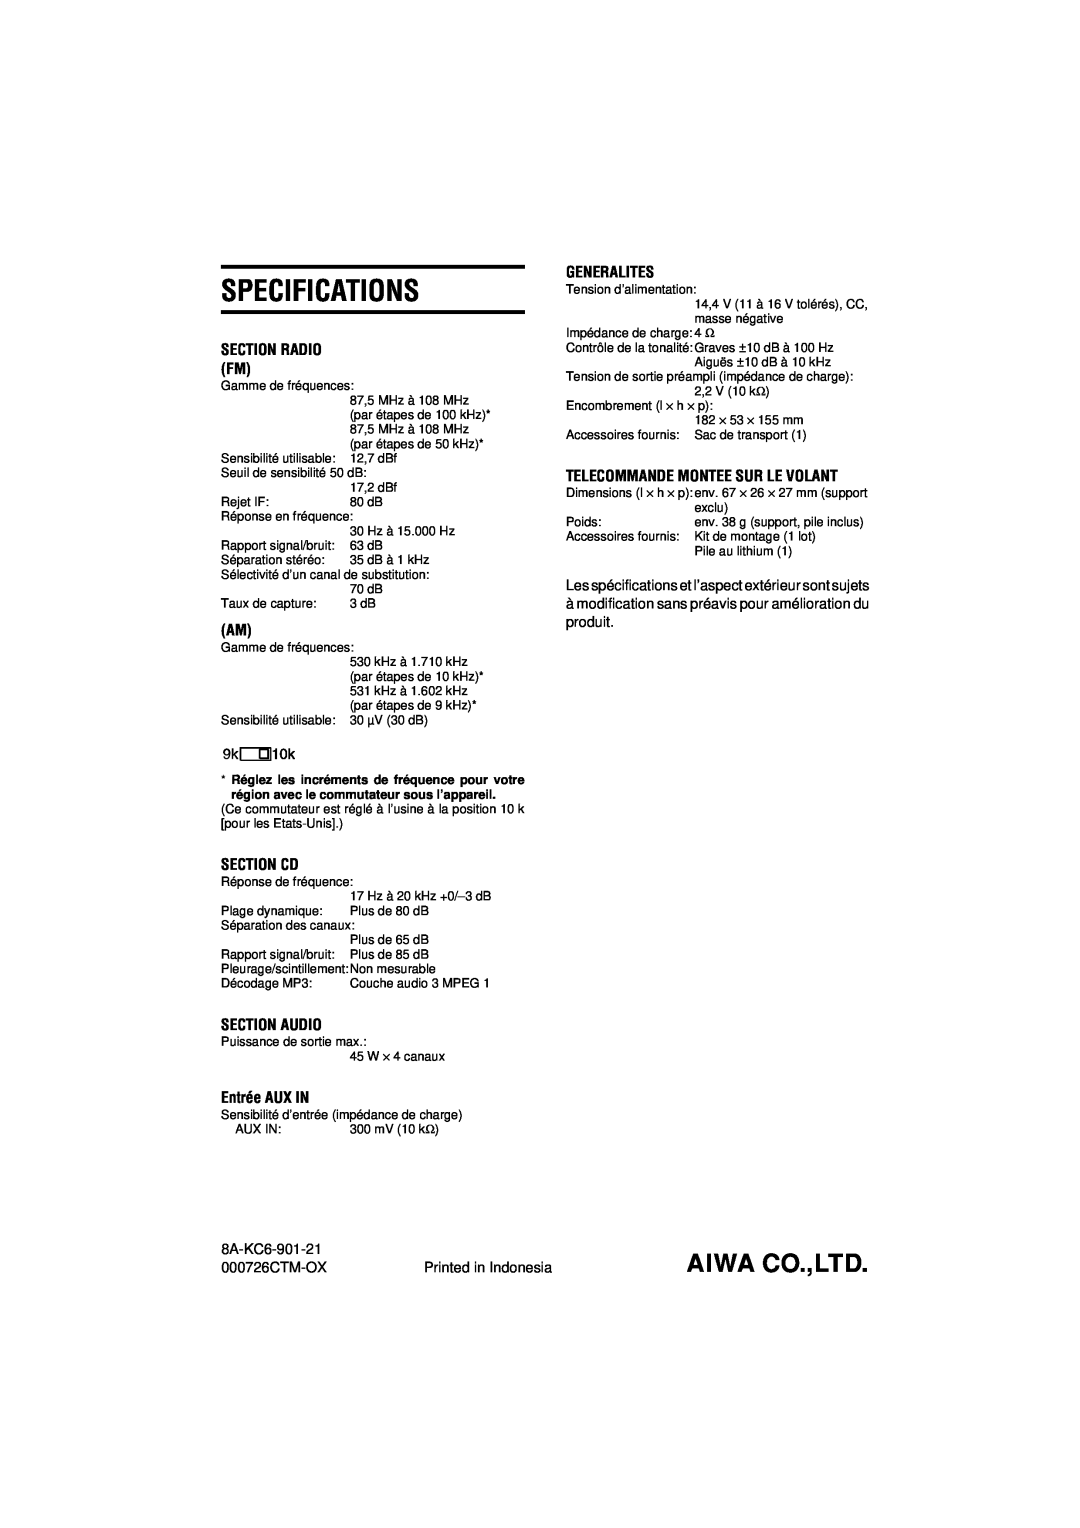 Aiwa CDC-MP3 manual Specifications, Section Radio Fm, Section Cd, Telecommande Montee Sur Le Volant, Entrée AUX IN 